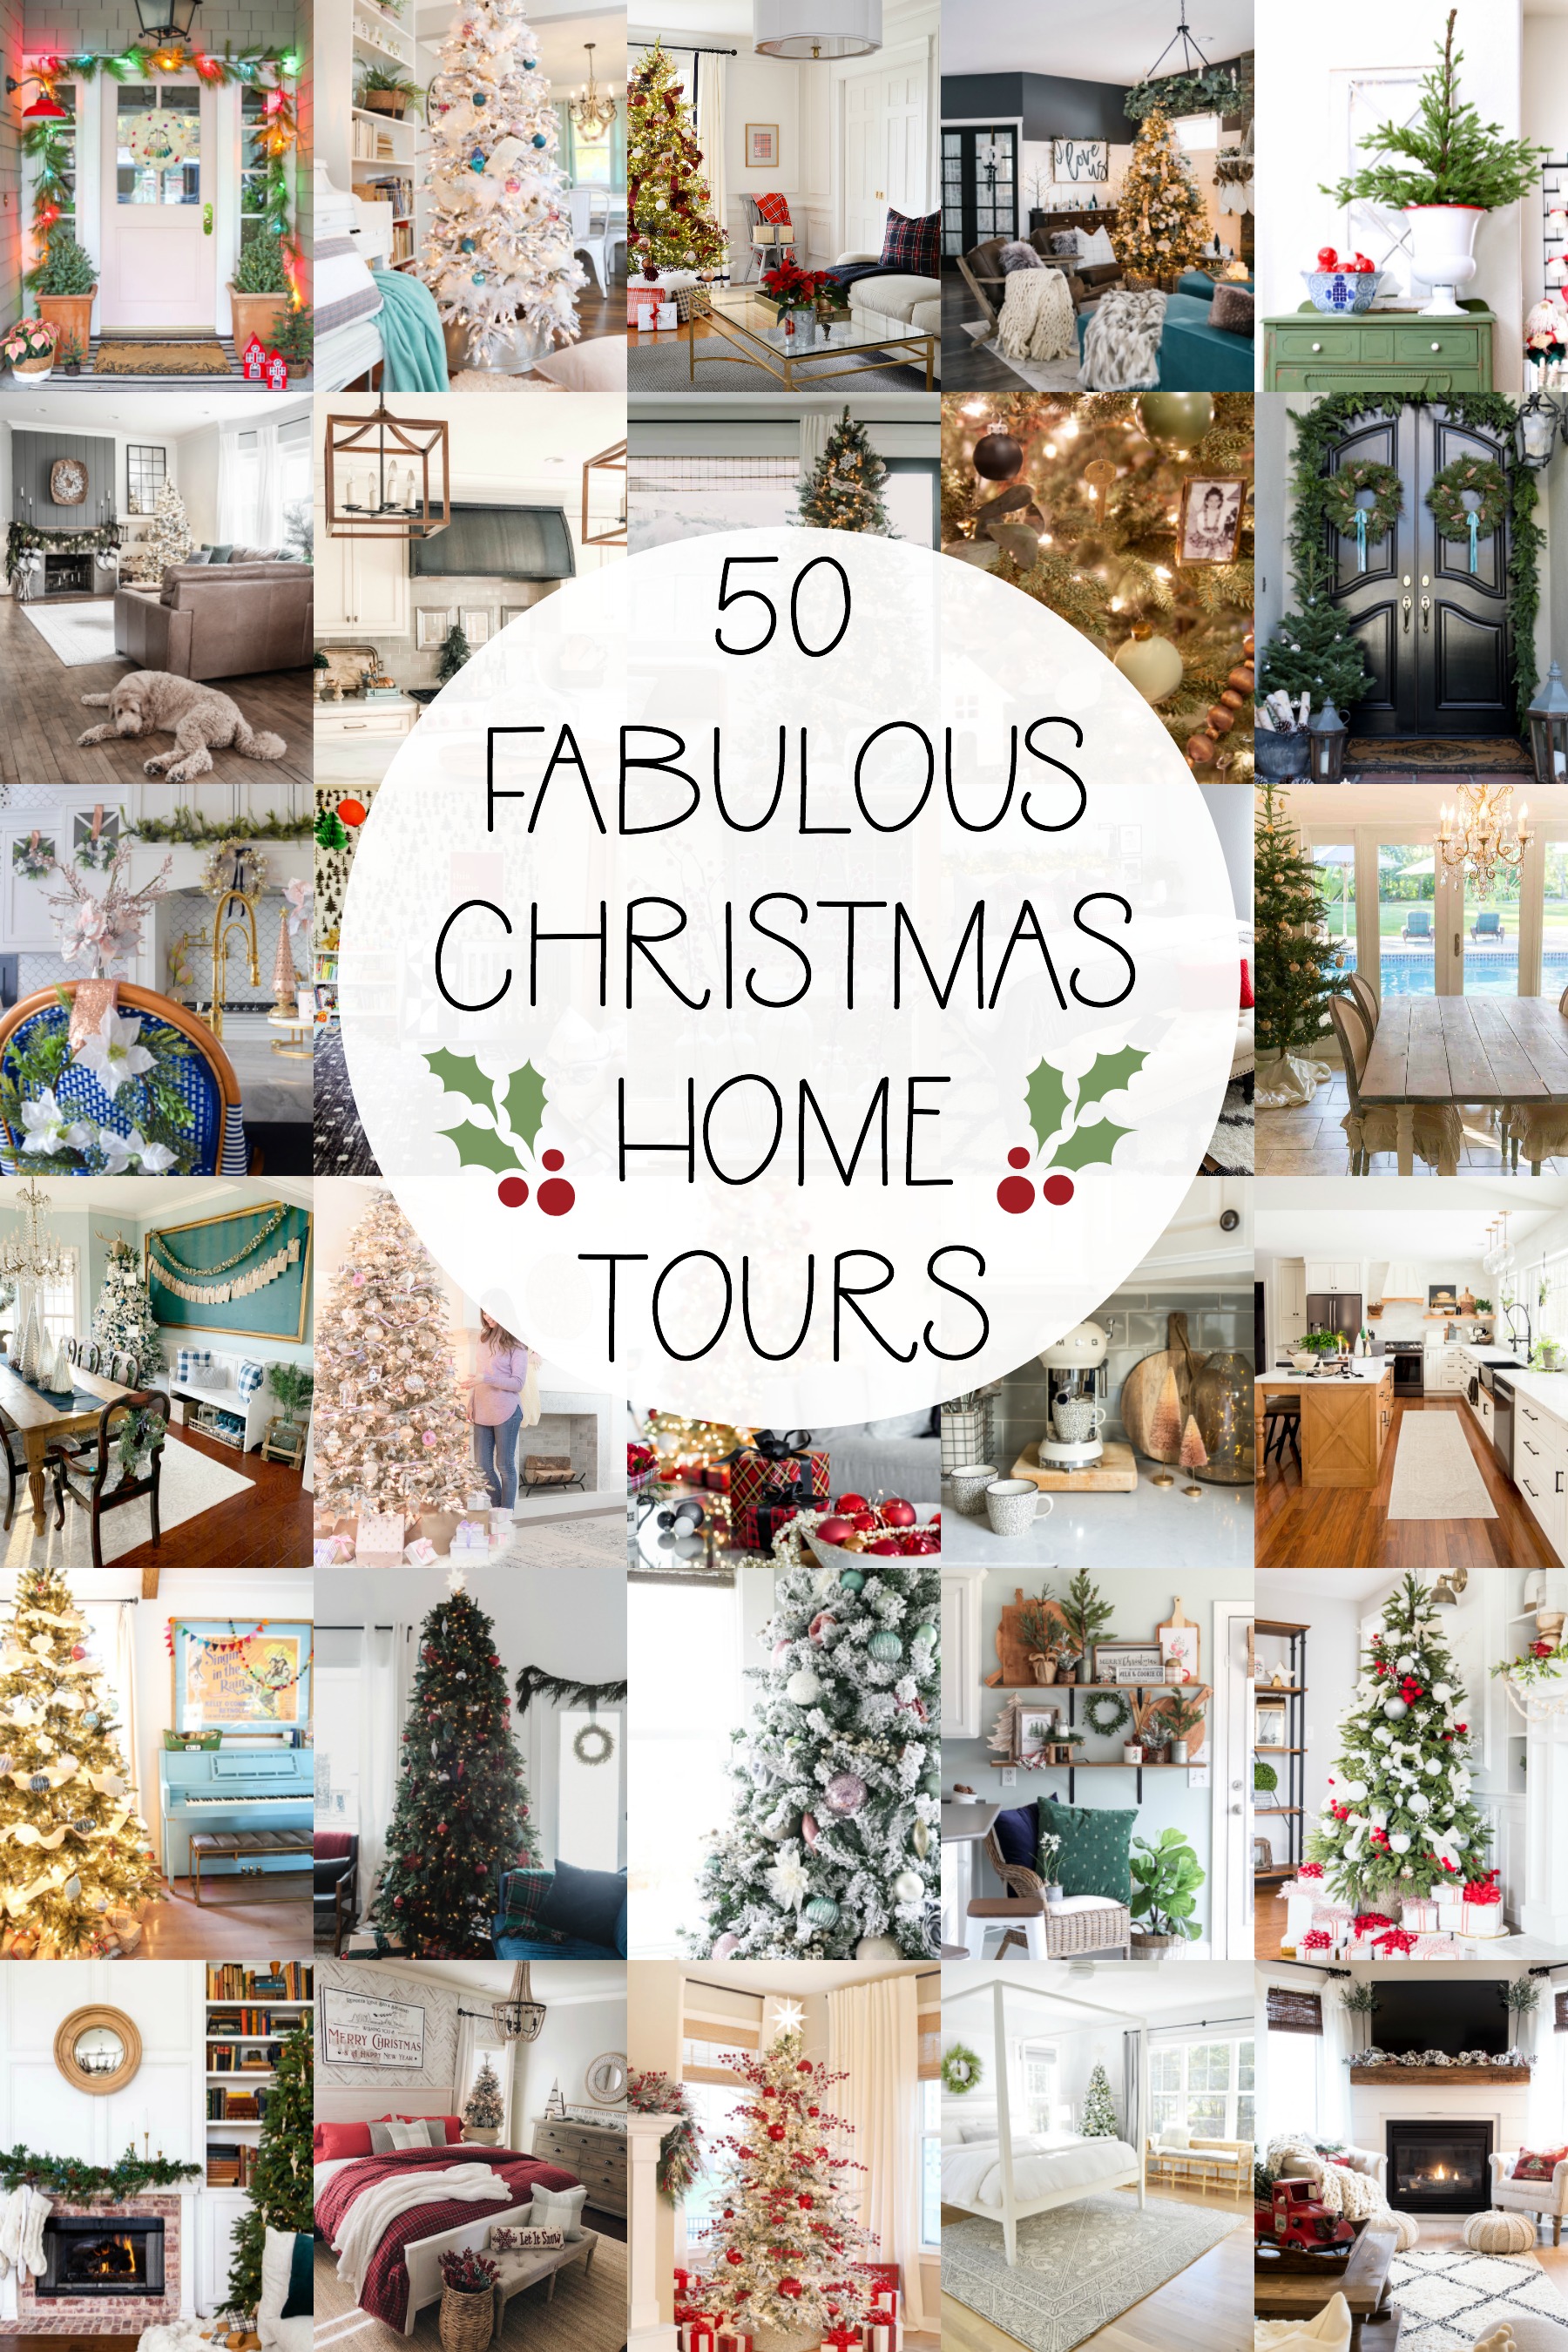 50 fabulous Christmas Home Tours poster.